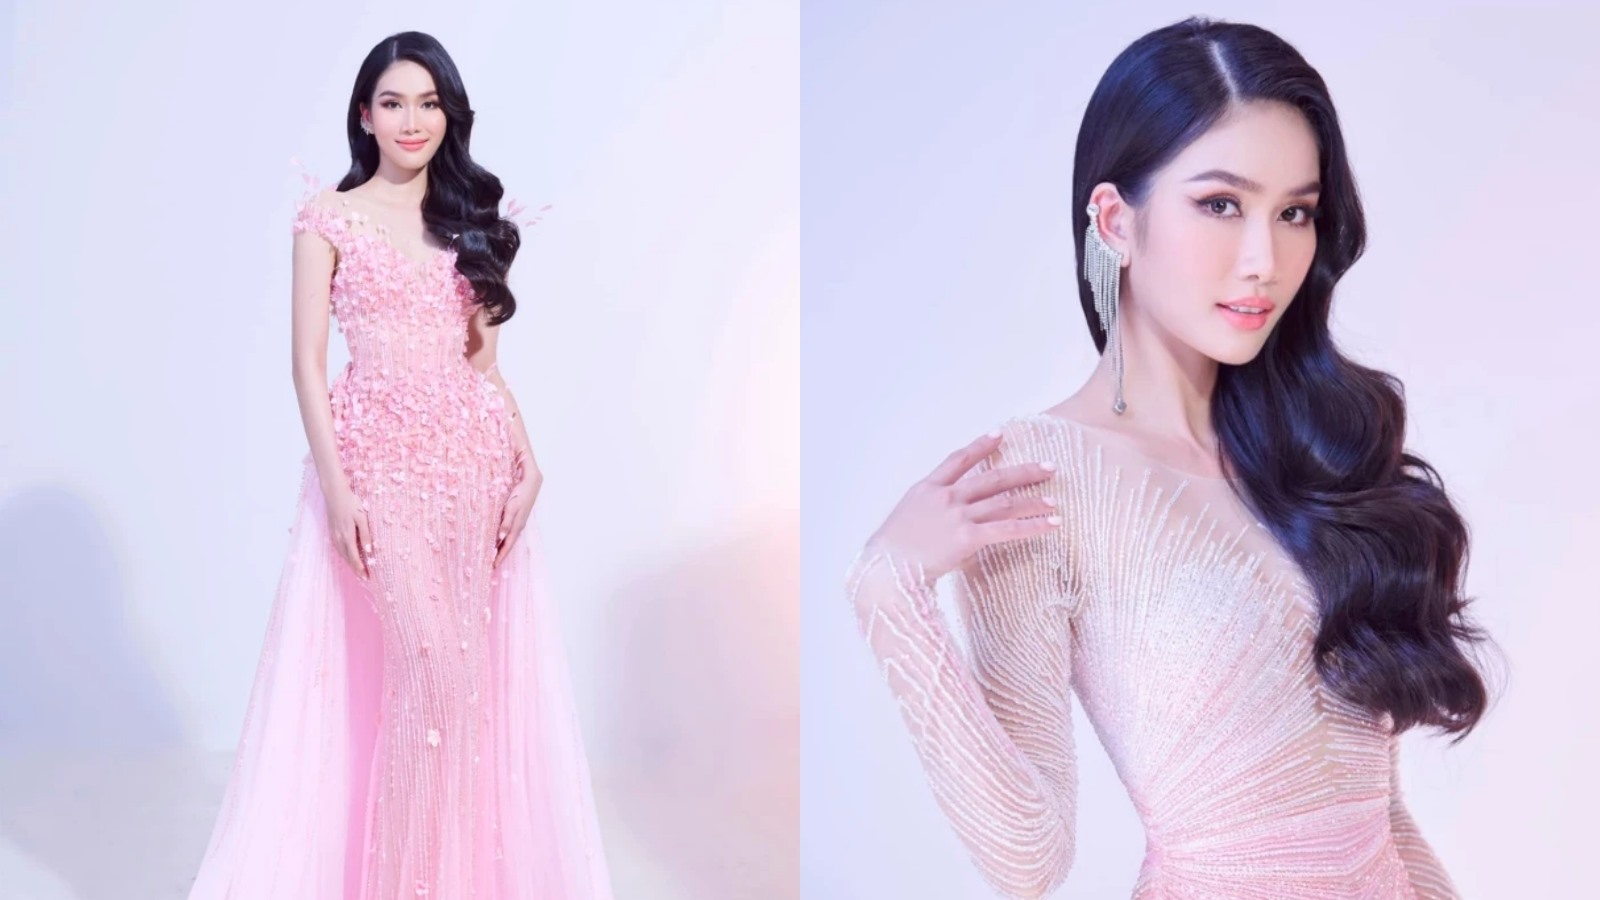 Phuong Anh นำ 2 นางแบบในชุดราตรีเข้าประกวด Miss International 2022 รูปภาพ: จัดทำโดยตัวละคร